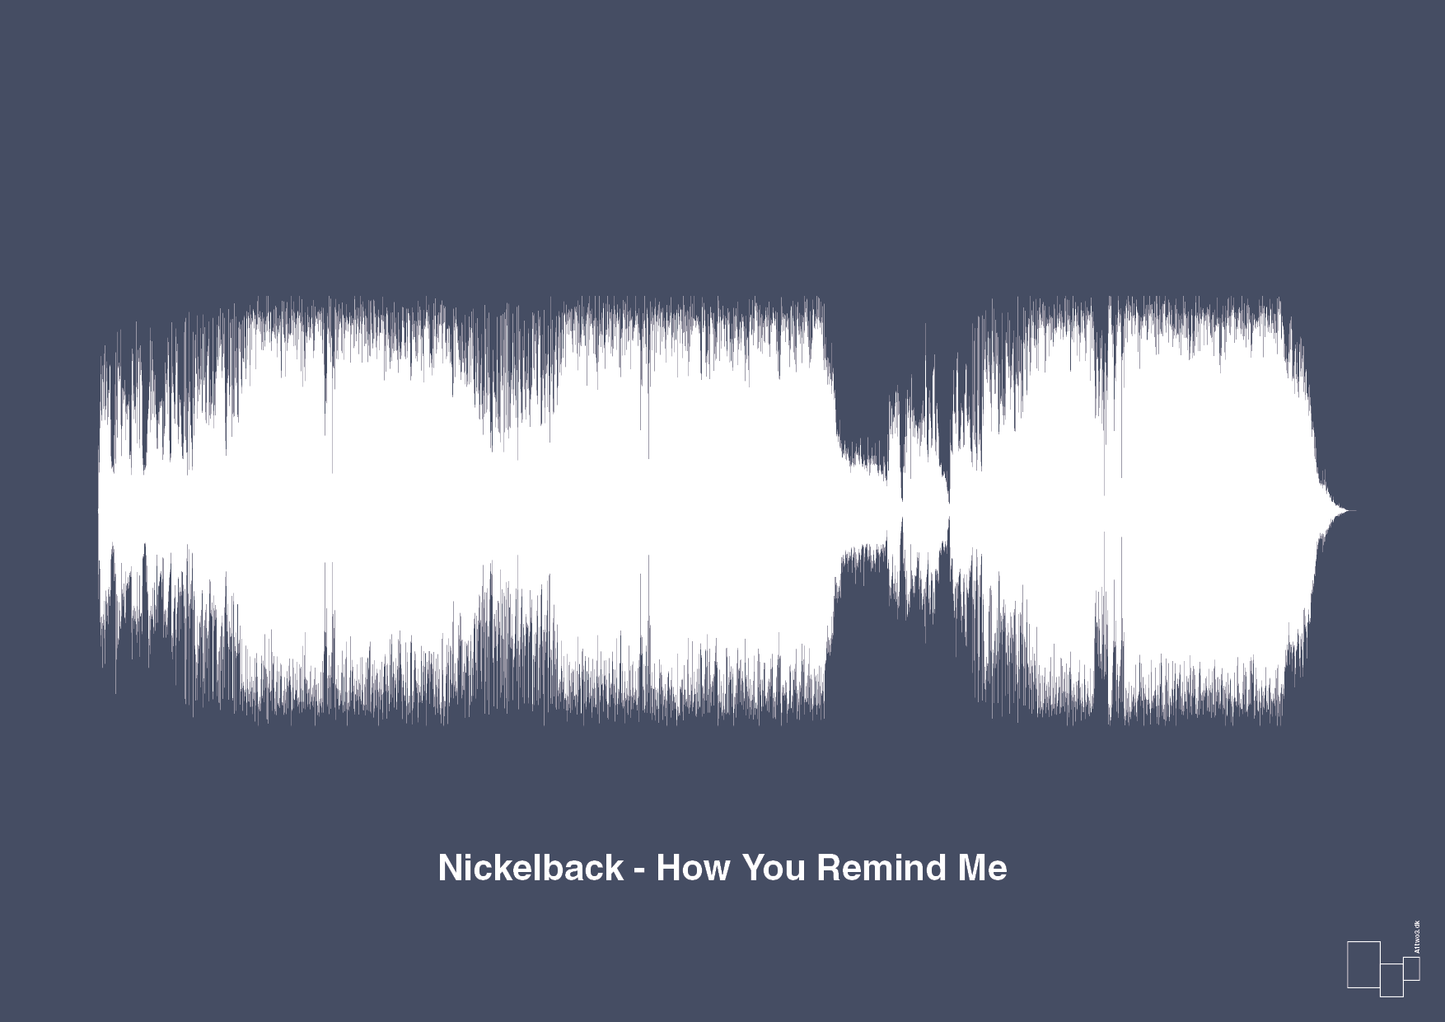 nickelback - how you remind me - Plakat med Musik i Petrol